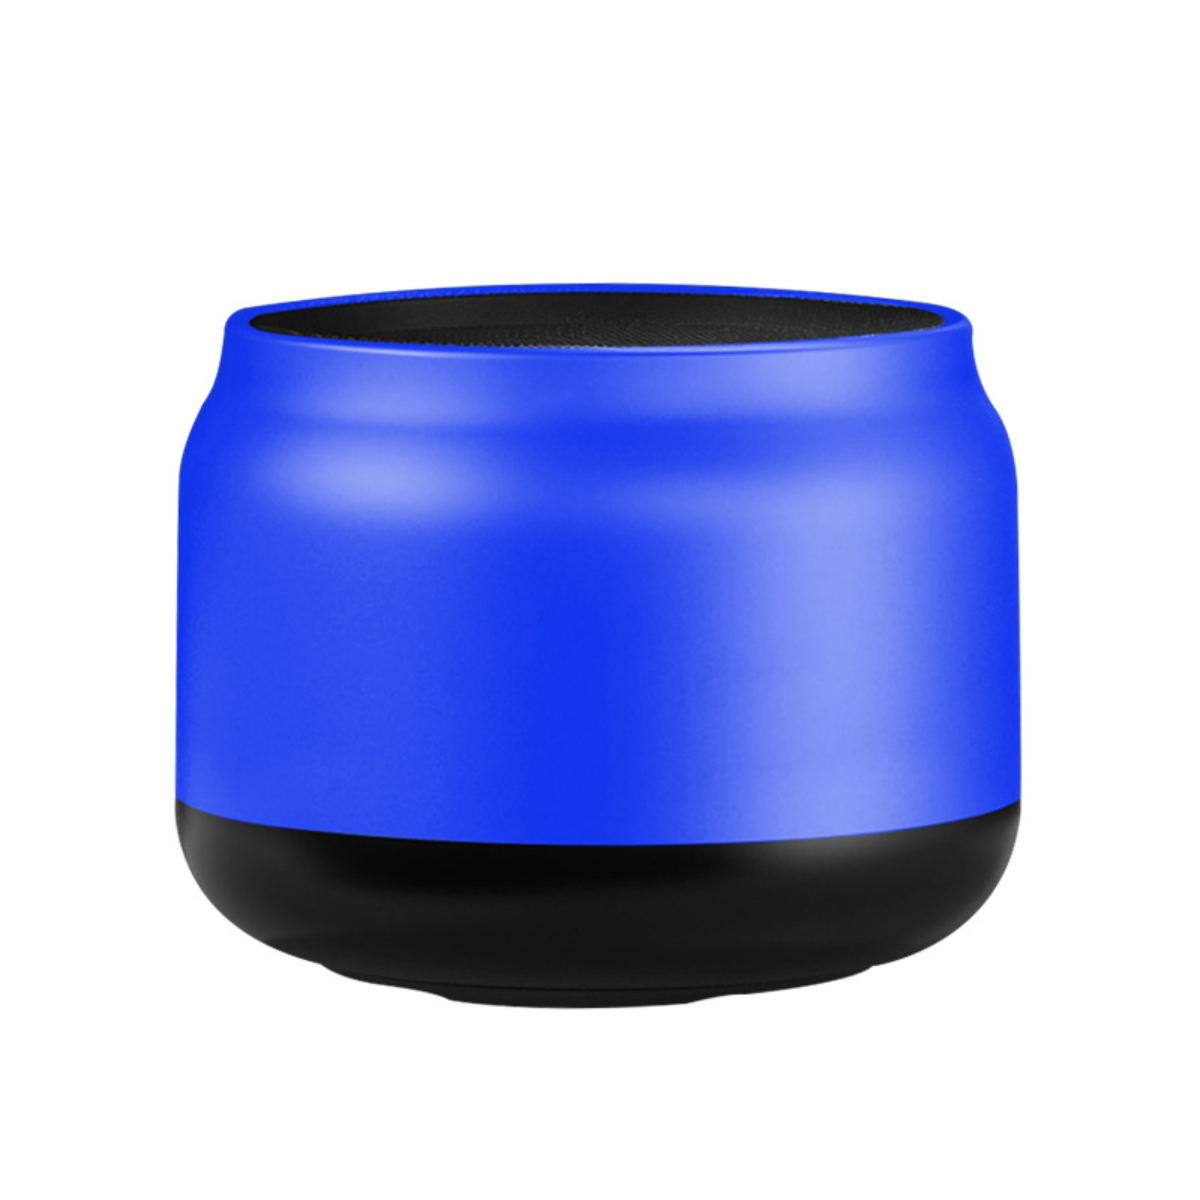 BYTELIKE Bluetooth-Mini-Metall-Lautsprecher, Subwoofer, Bluetooth-Lautsprecher, Langlebigkeit, Kompakt und Tragbar Blau